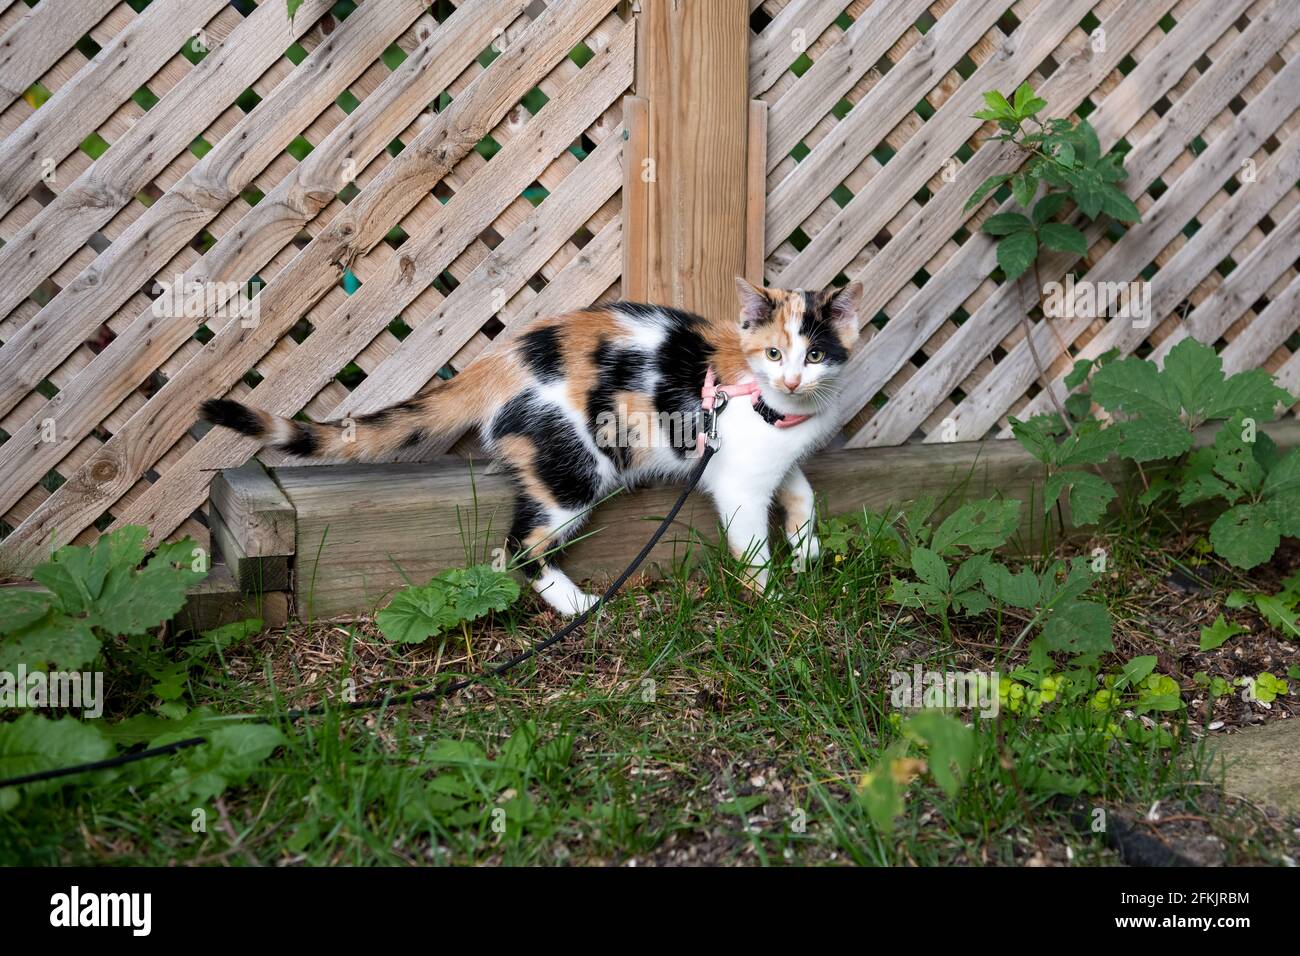 Young calico kitten exploring the backyard Stock Photo